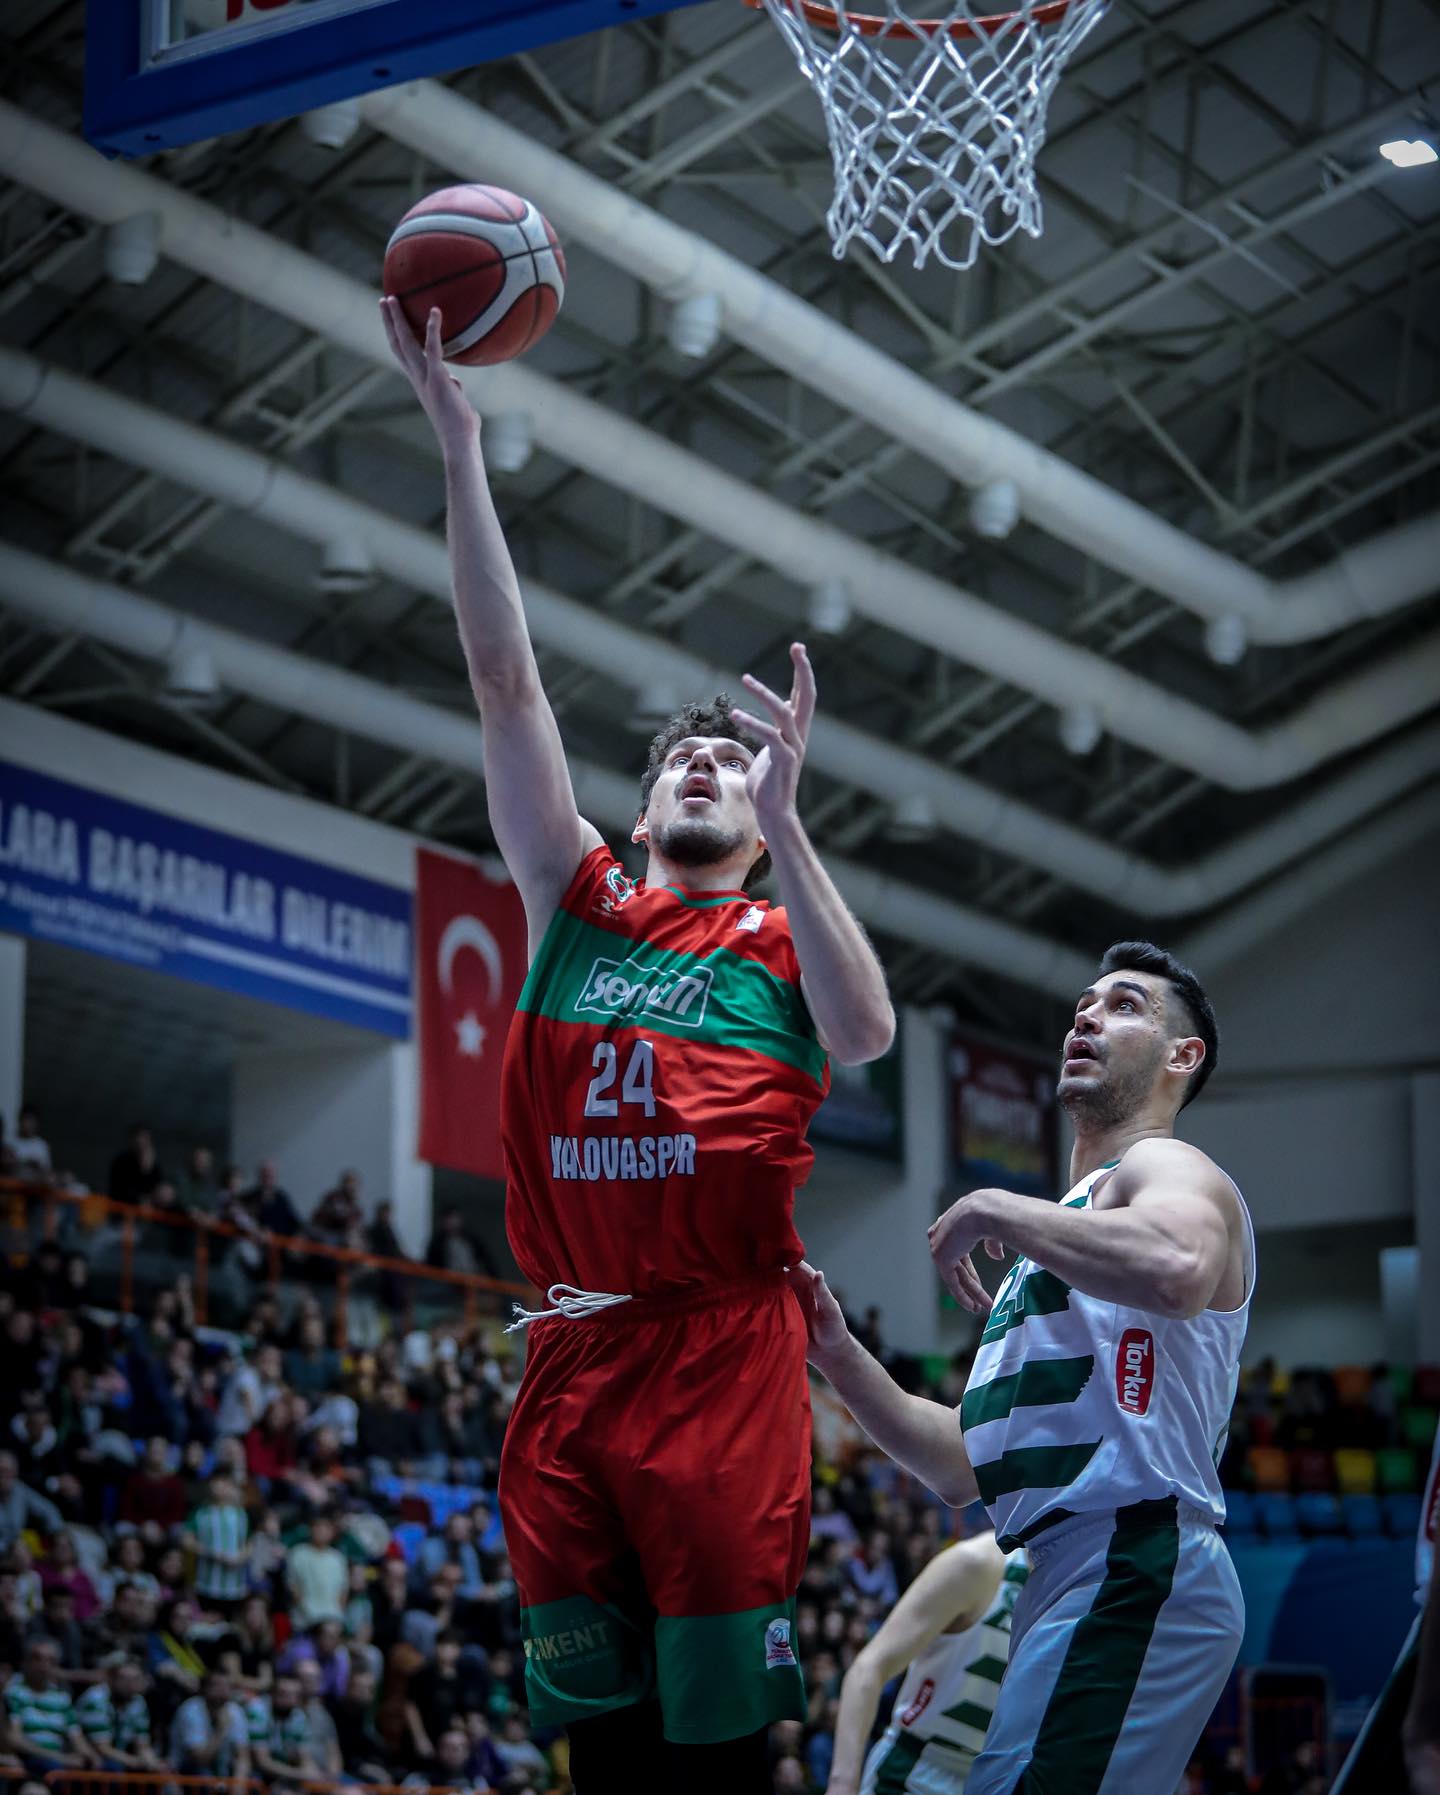 yalova-semt77-erkek-basketbol-tbl-lig-sezon-konyaspor (5)